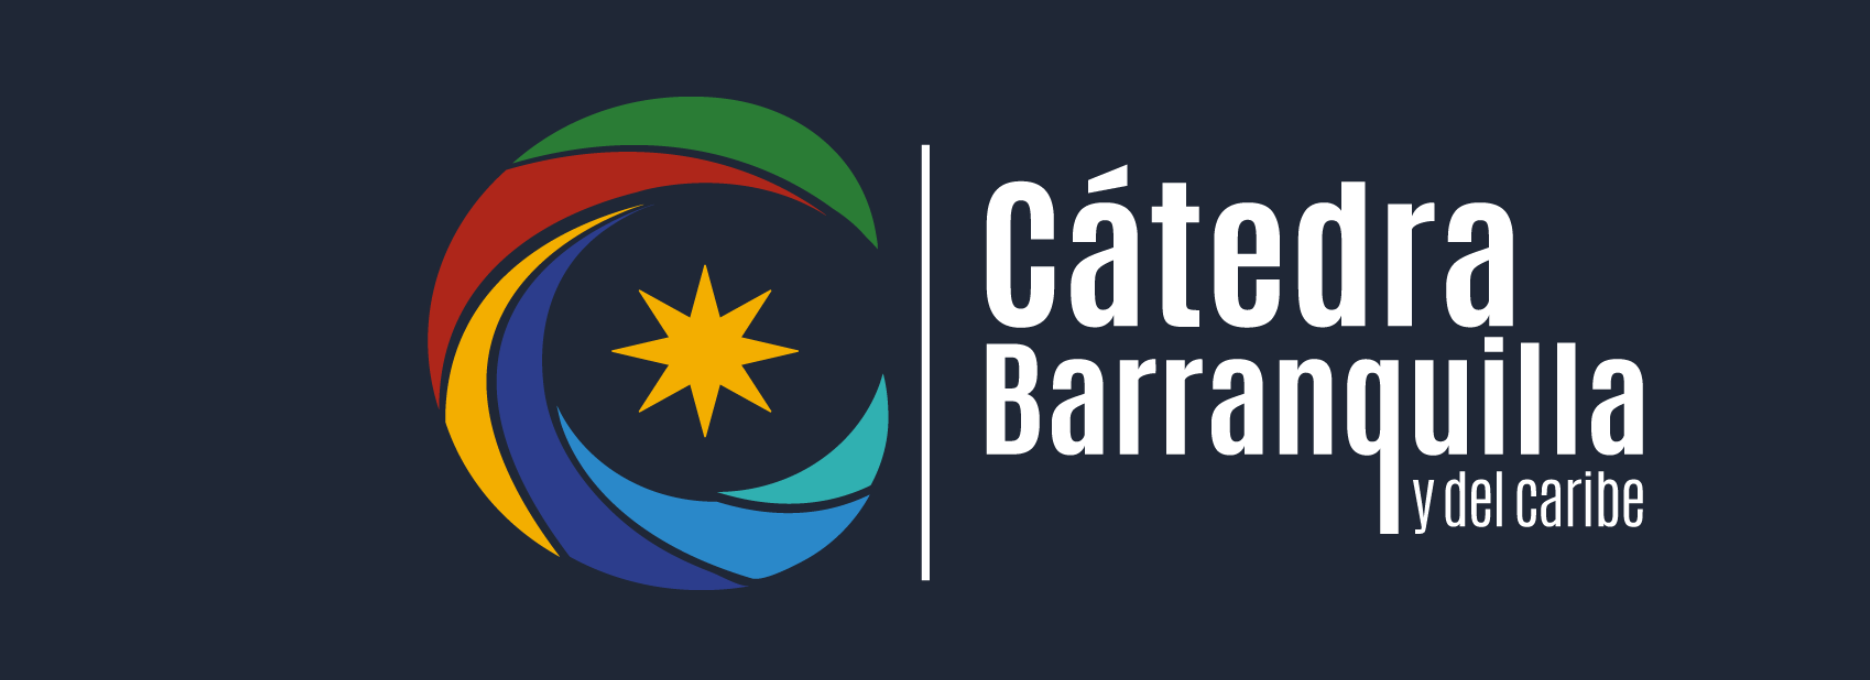 imagen-Catedra-Barranquilla-y-del-Caribe.png